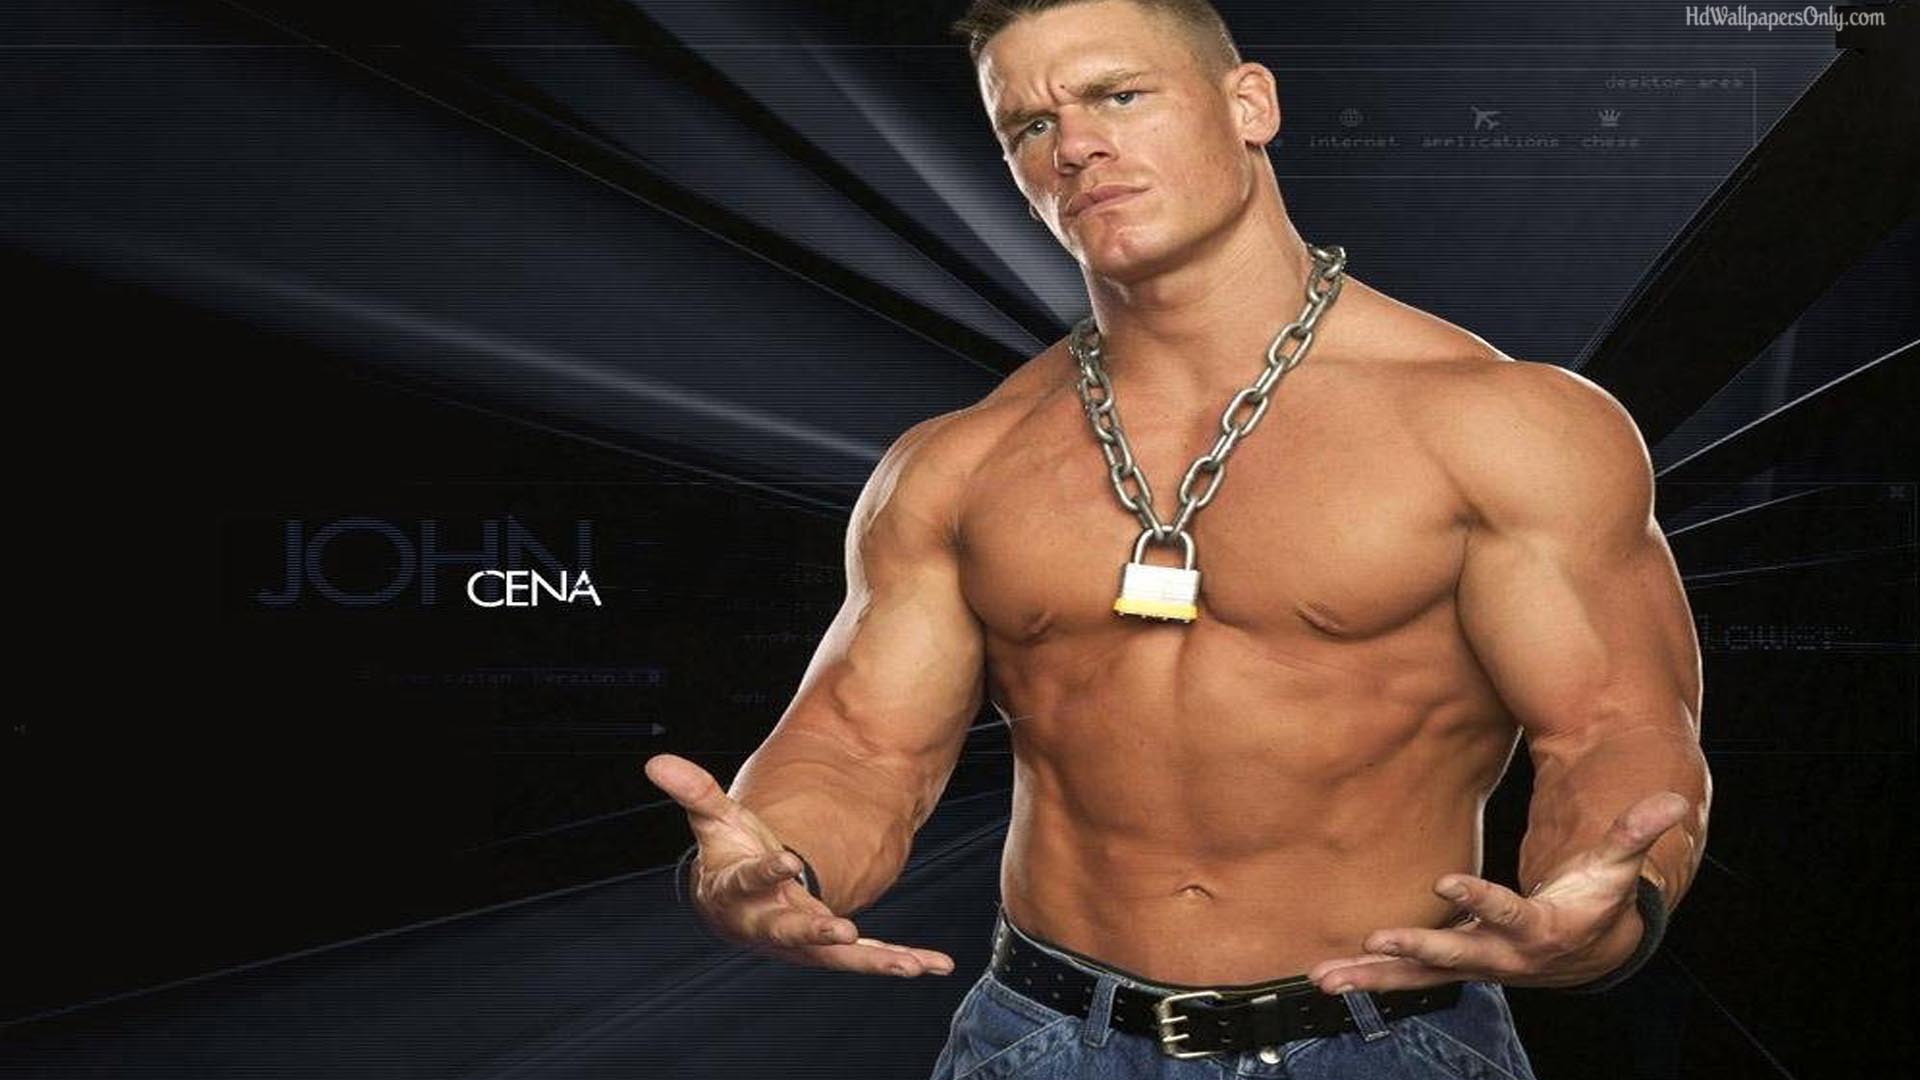 John Cena Wallpaper Celebrities Sports